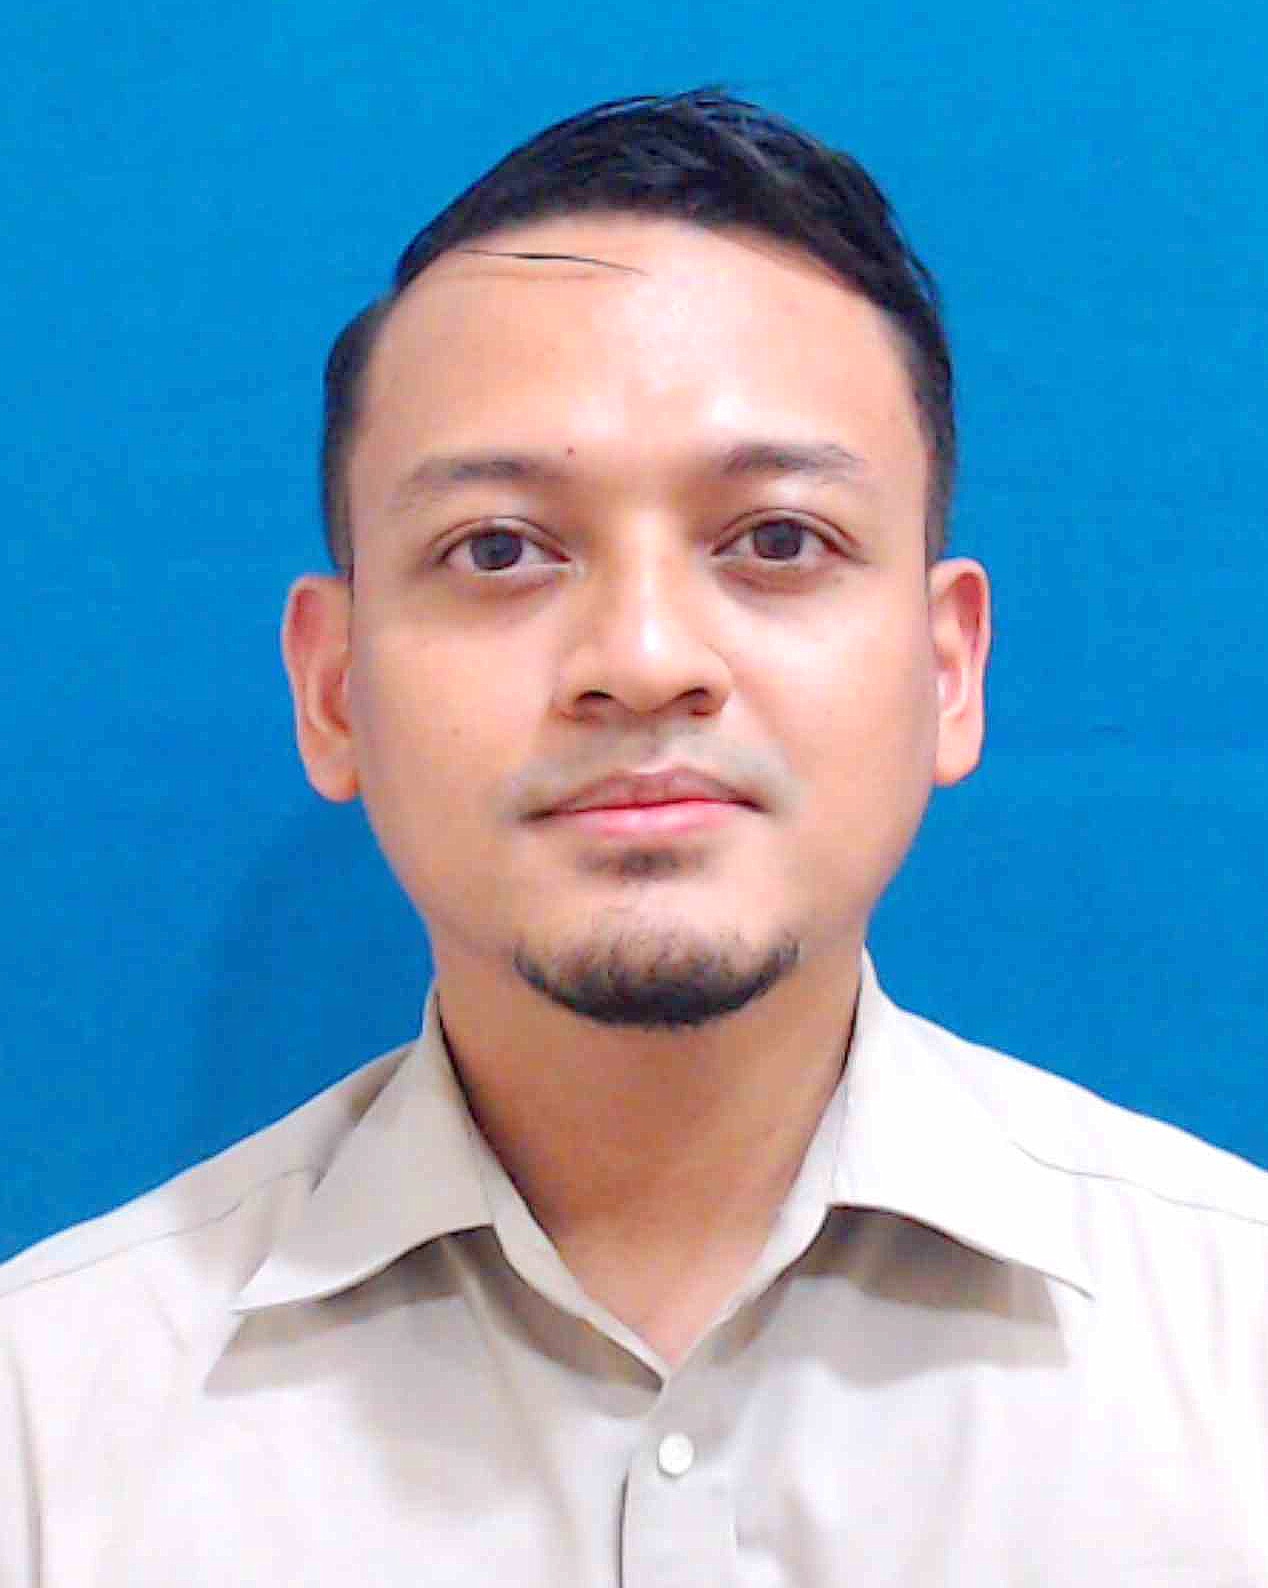 Abdul Hakim Bin Mohd Rosaidi